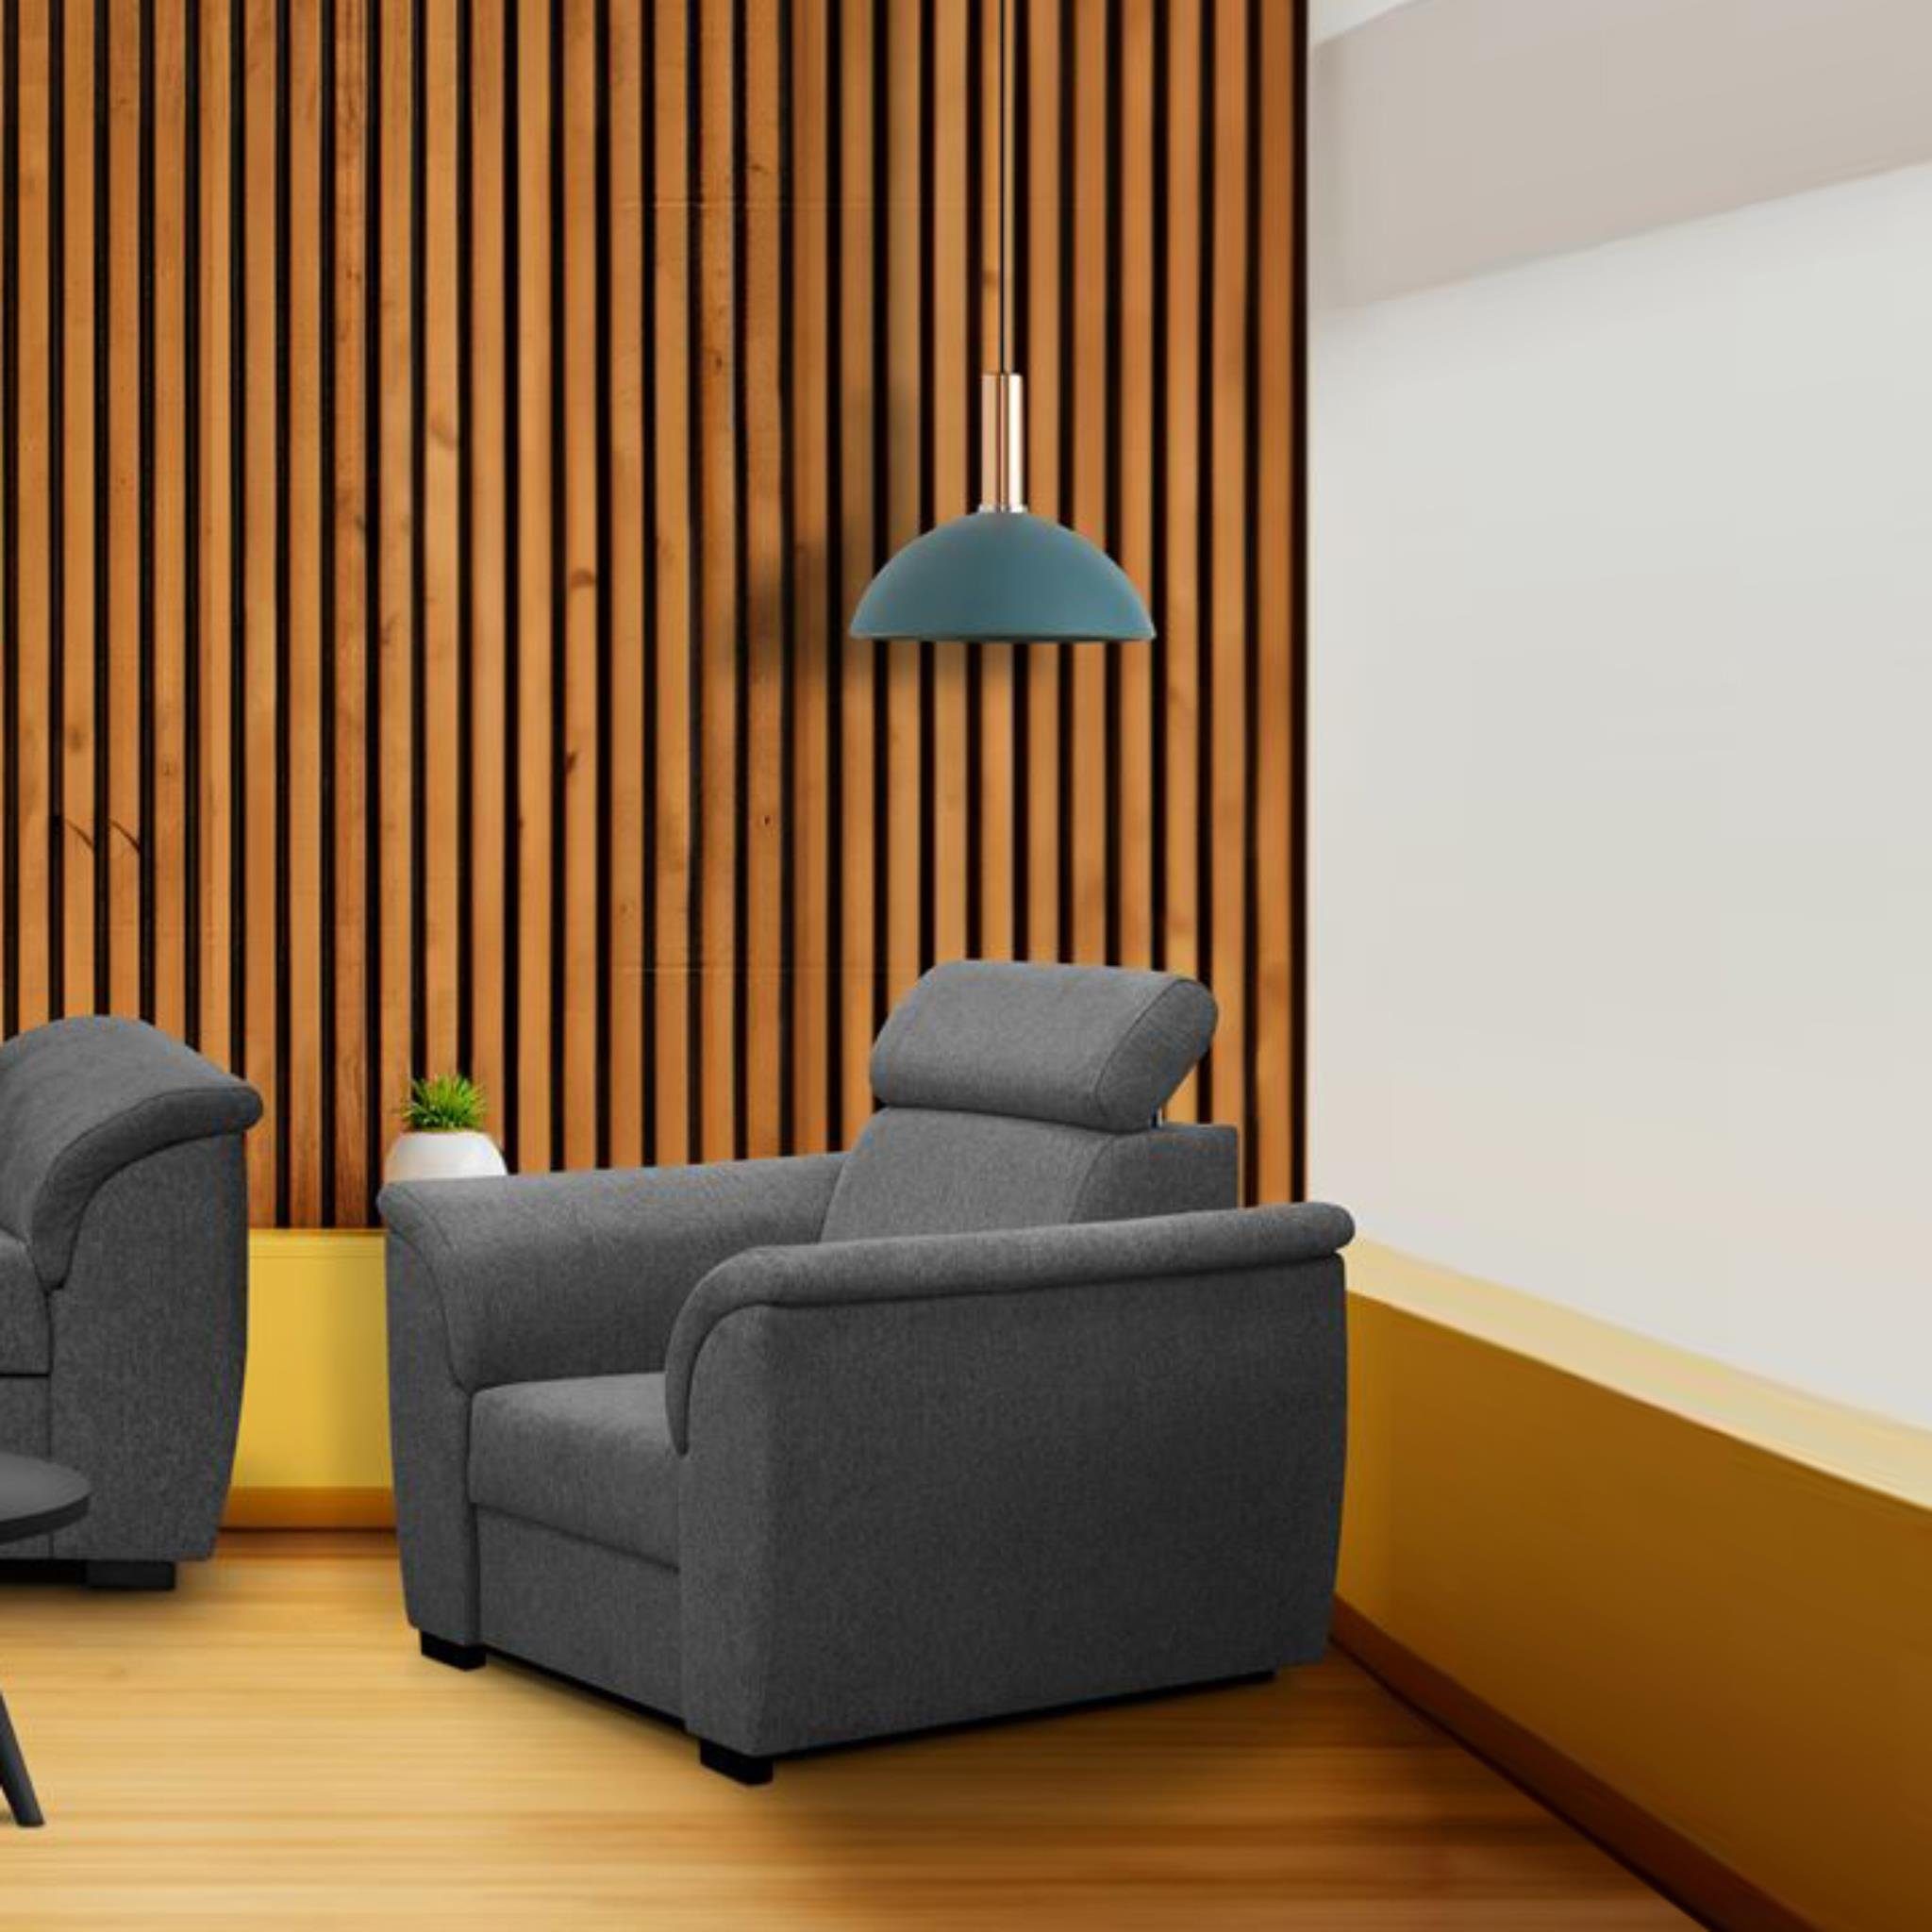 Beautysofa Relaxsessel Madera (modern Lounge Polstersessel mit Wellenfedern), stilvoll Sessel mit verstellbare Kopfstütze Dunkelgrau (matana 05)